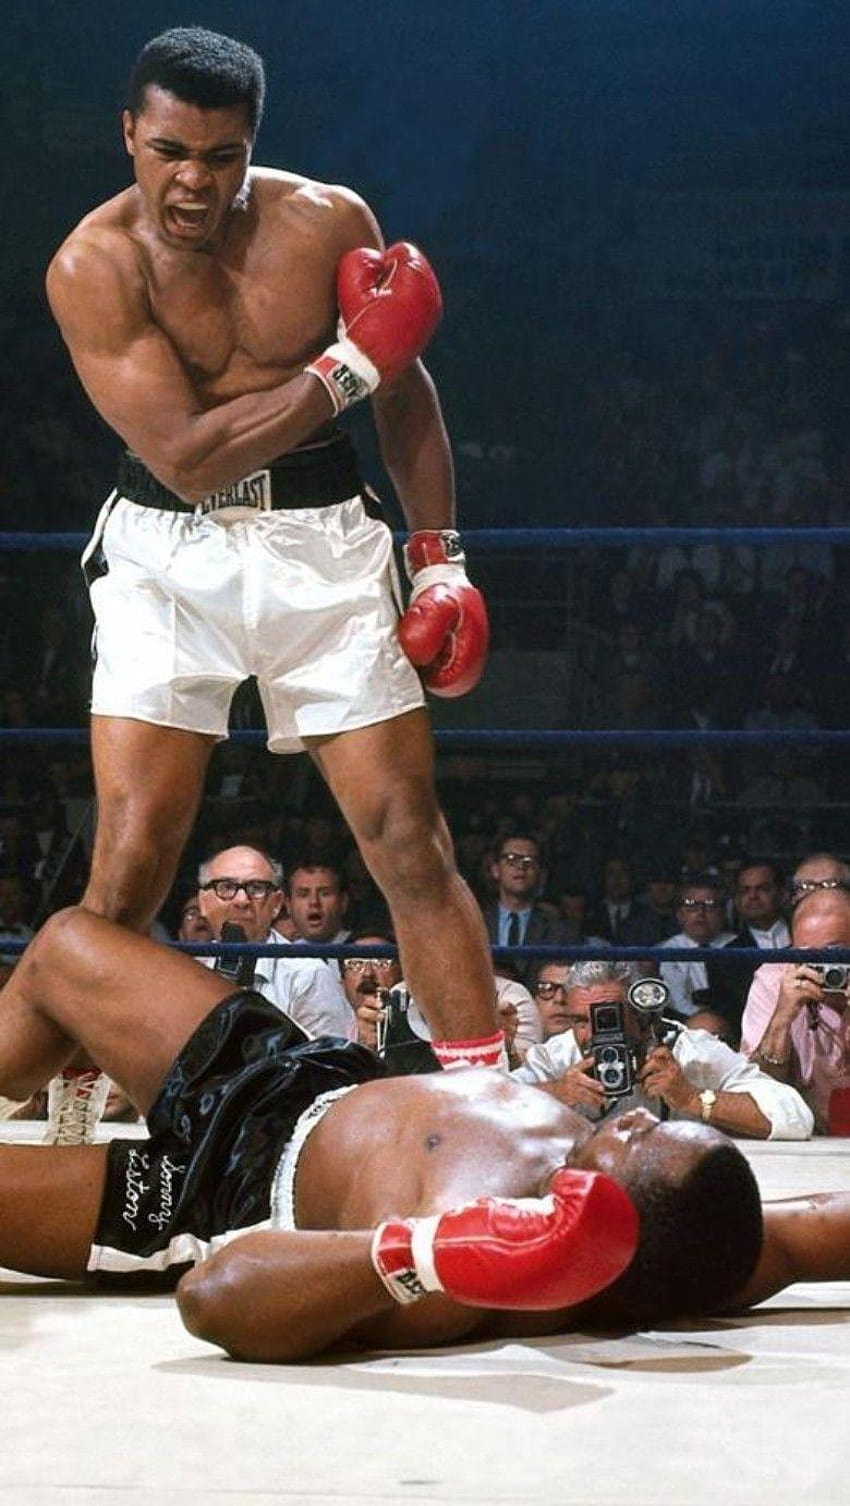 Foto Ikonik Muhammad Ali vs Sonny Liston: Bangun dan Bertarunglah, muhammed ali HD phone wallpaper